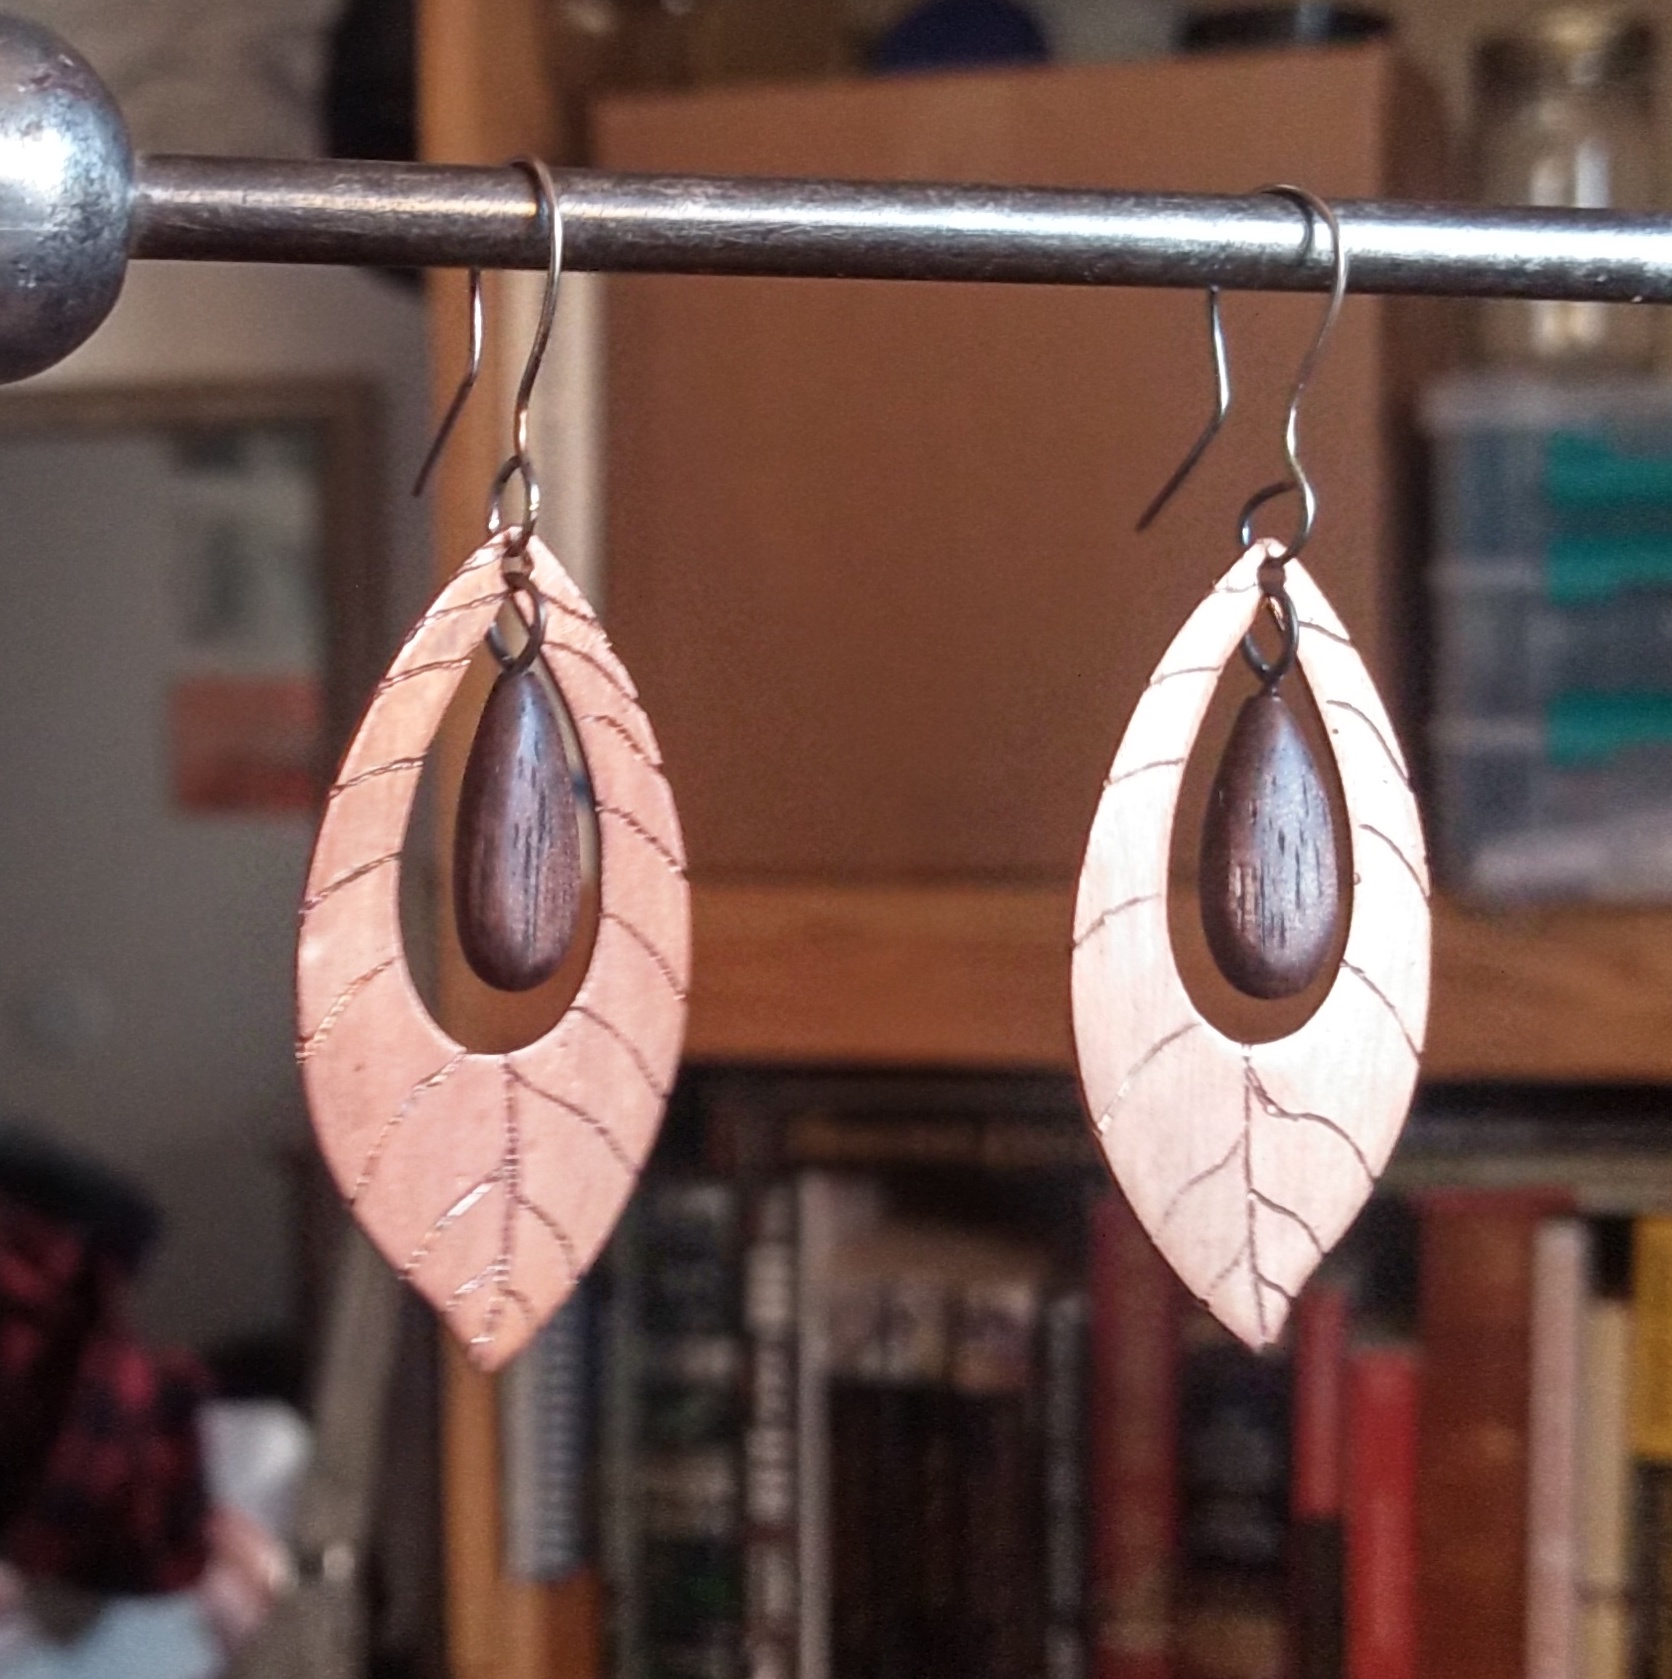 Two copper earrings shaped like walnut leaves with walnut wood pendants within them